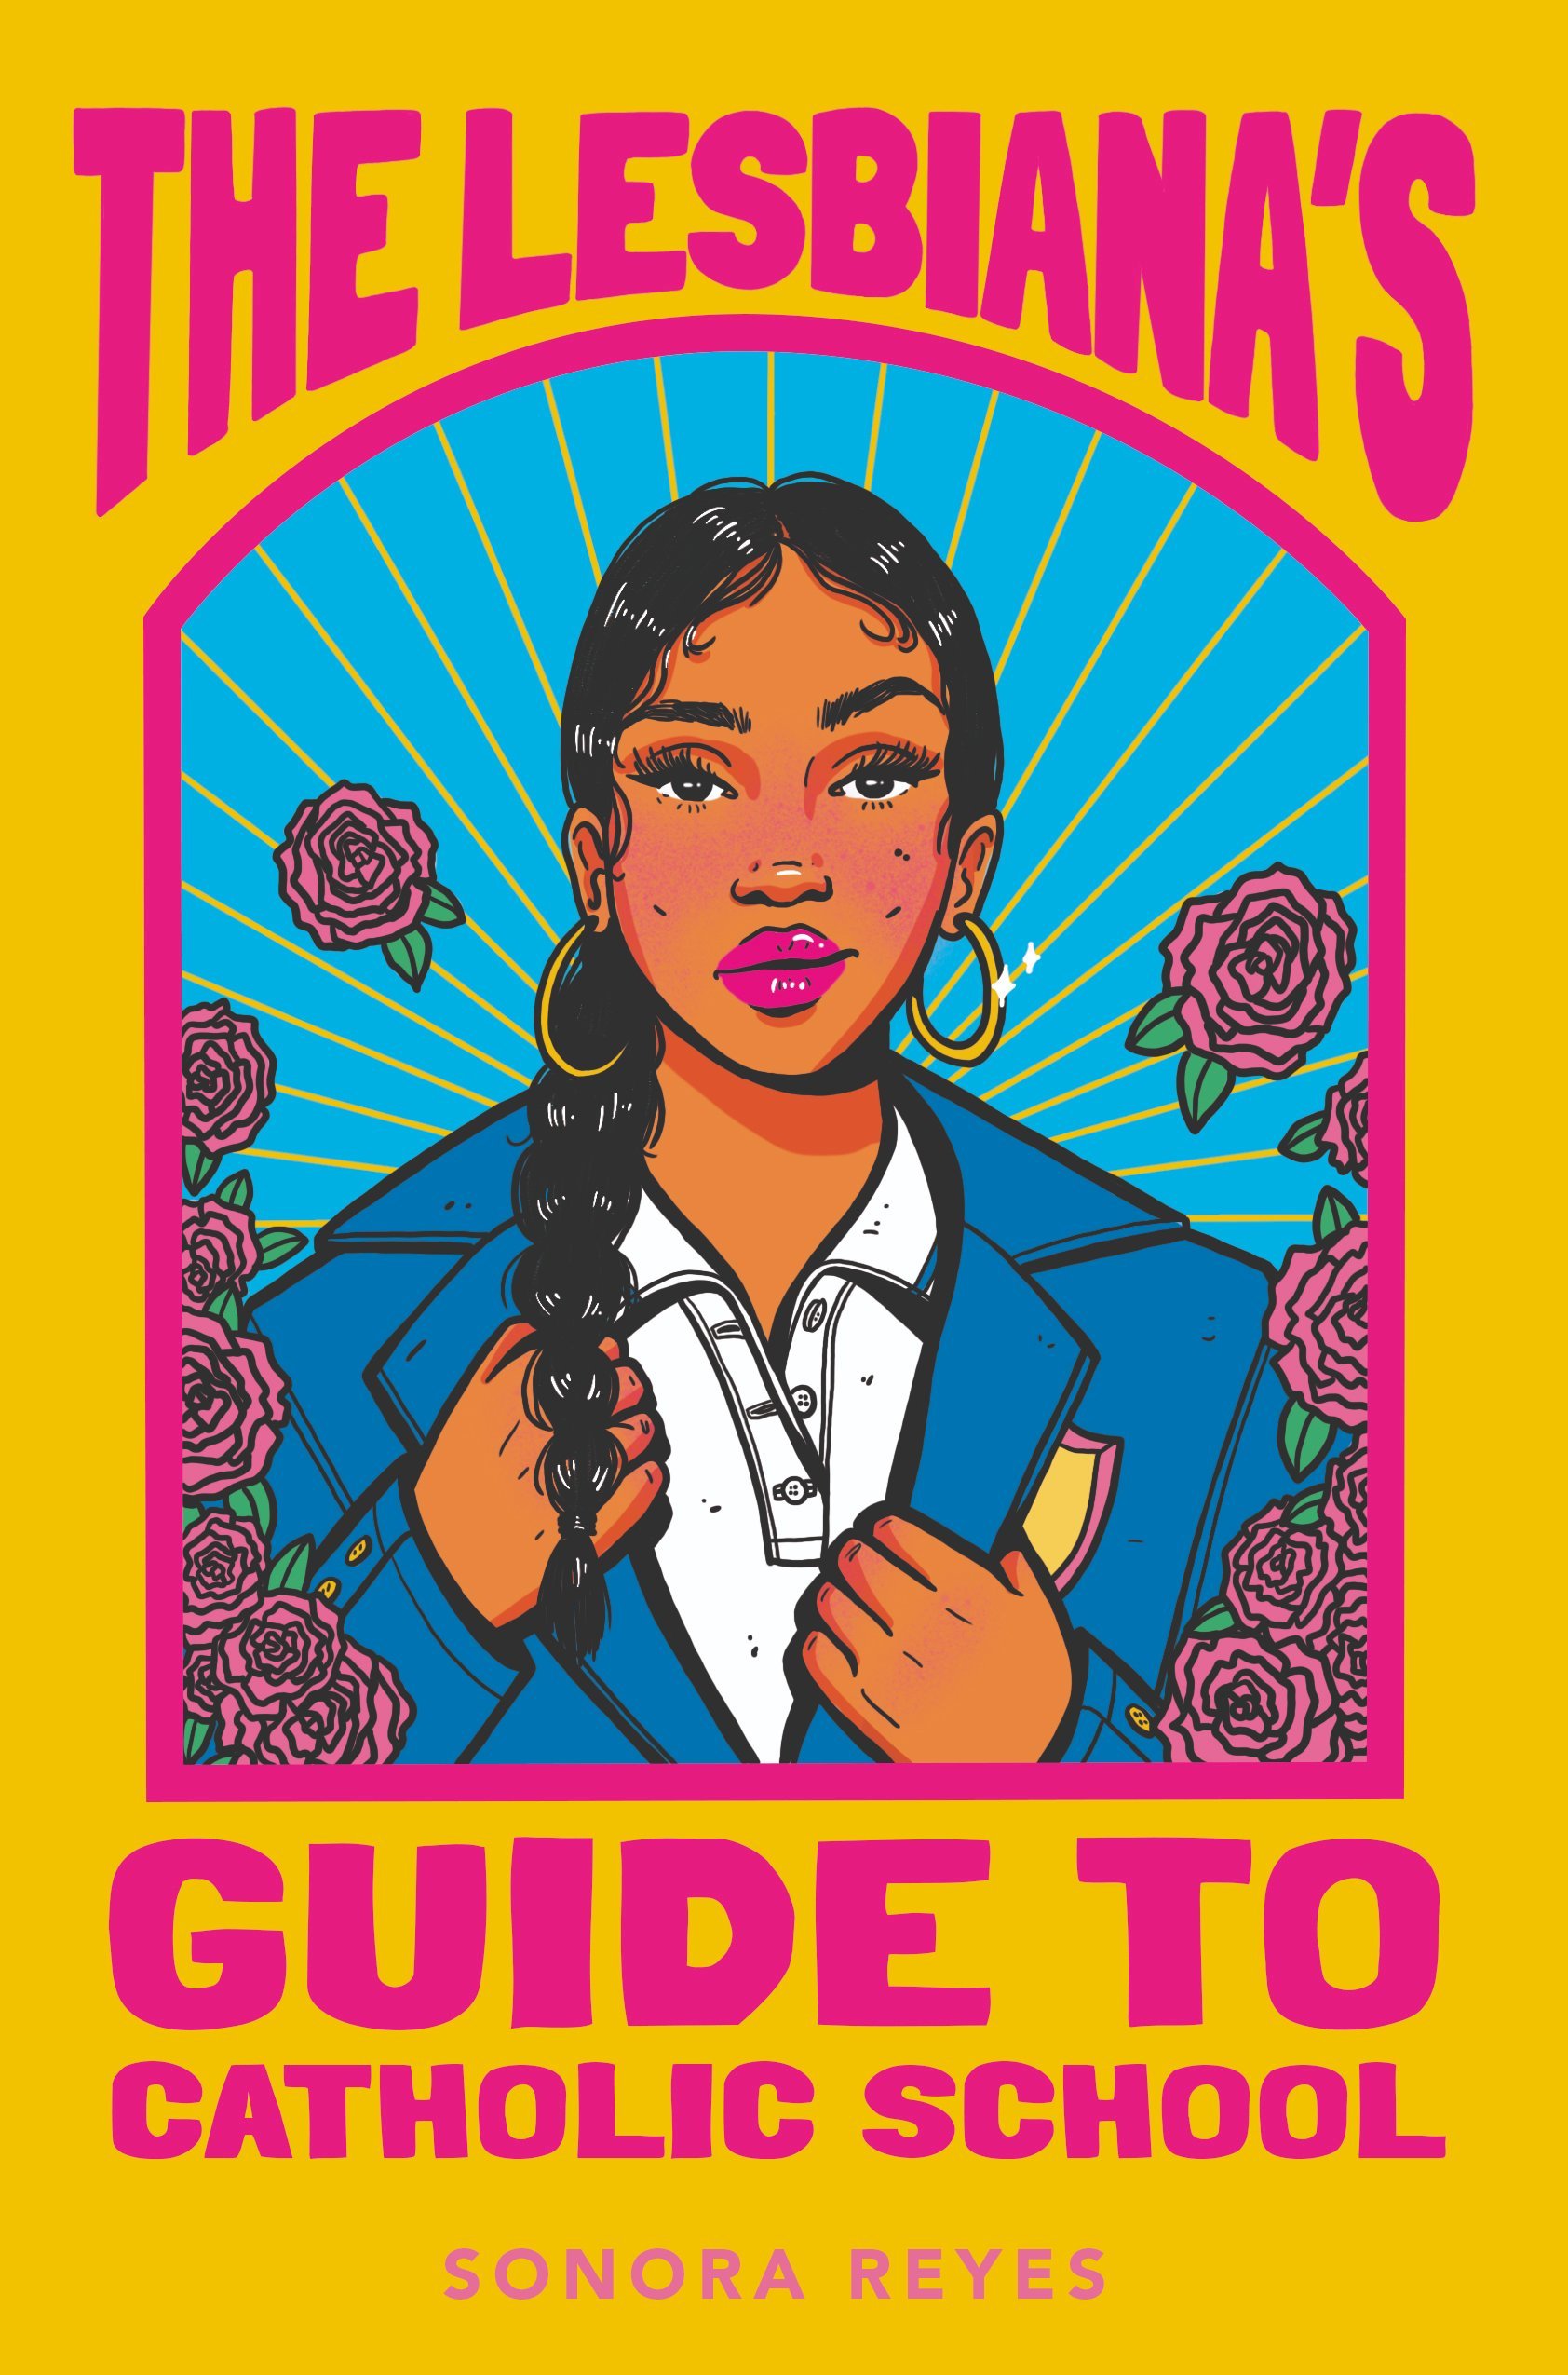 Sonora Reyes: The Lesbiana's Guide to Catholic School (Balzer + Bray)